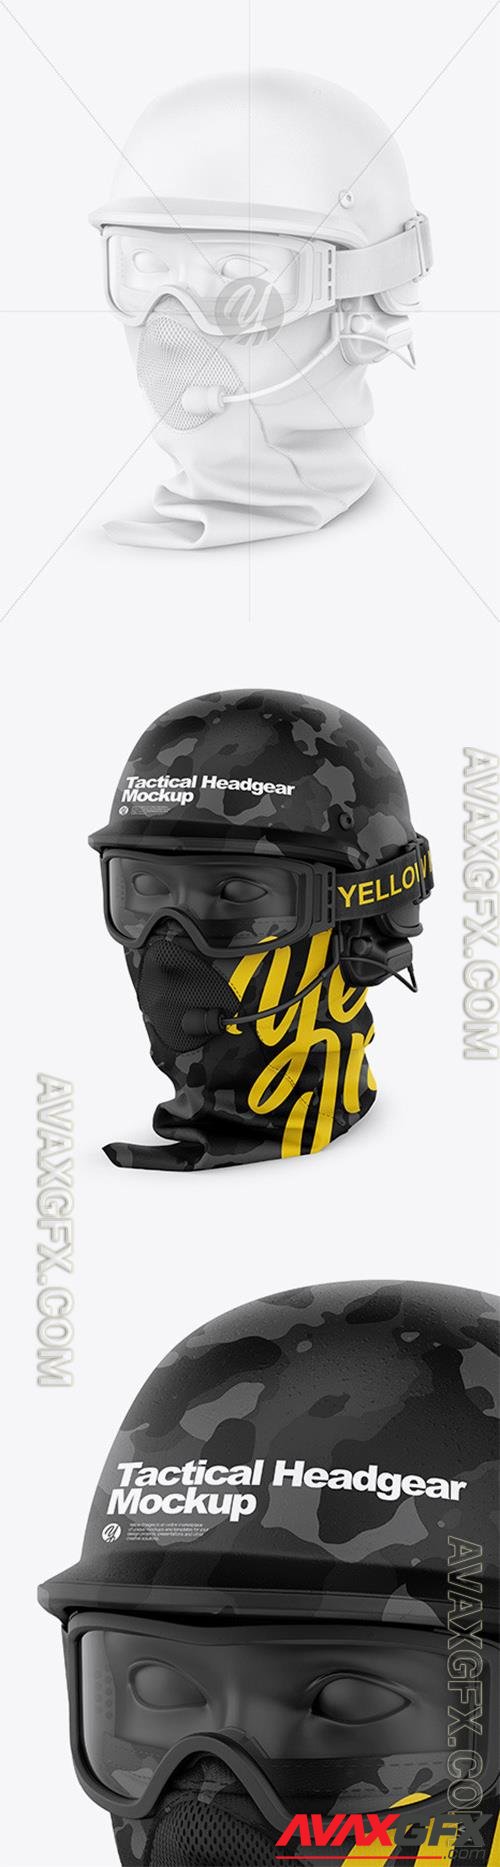 Tactical Headgear Mockup - Half Side View 72843